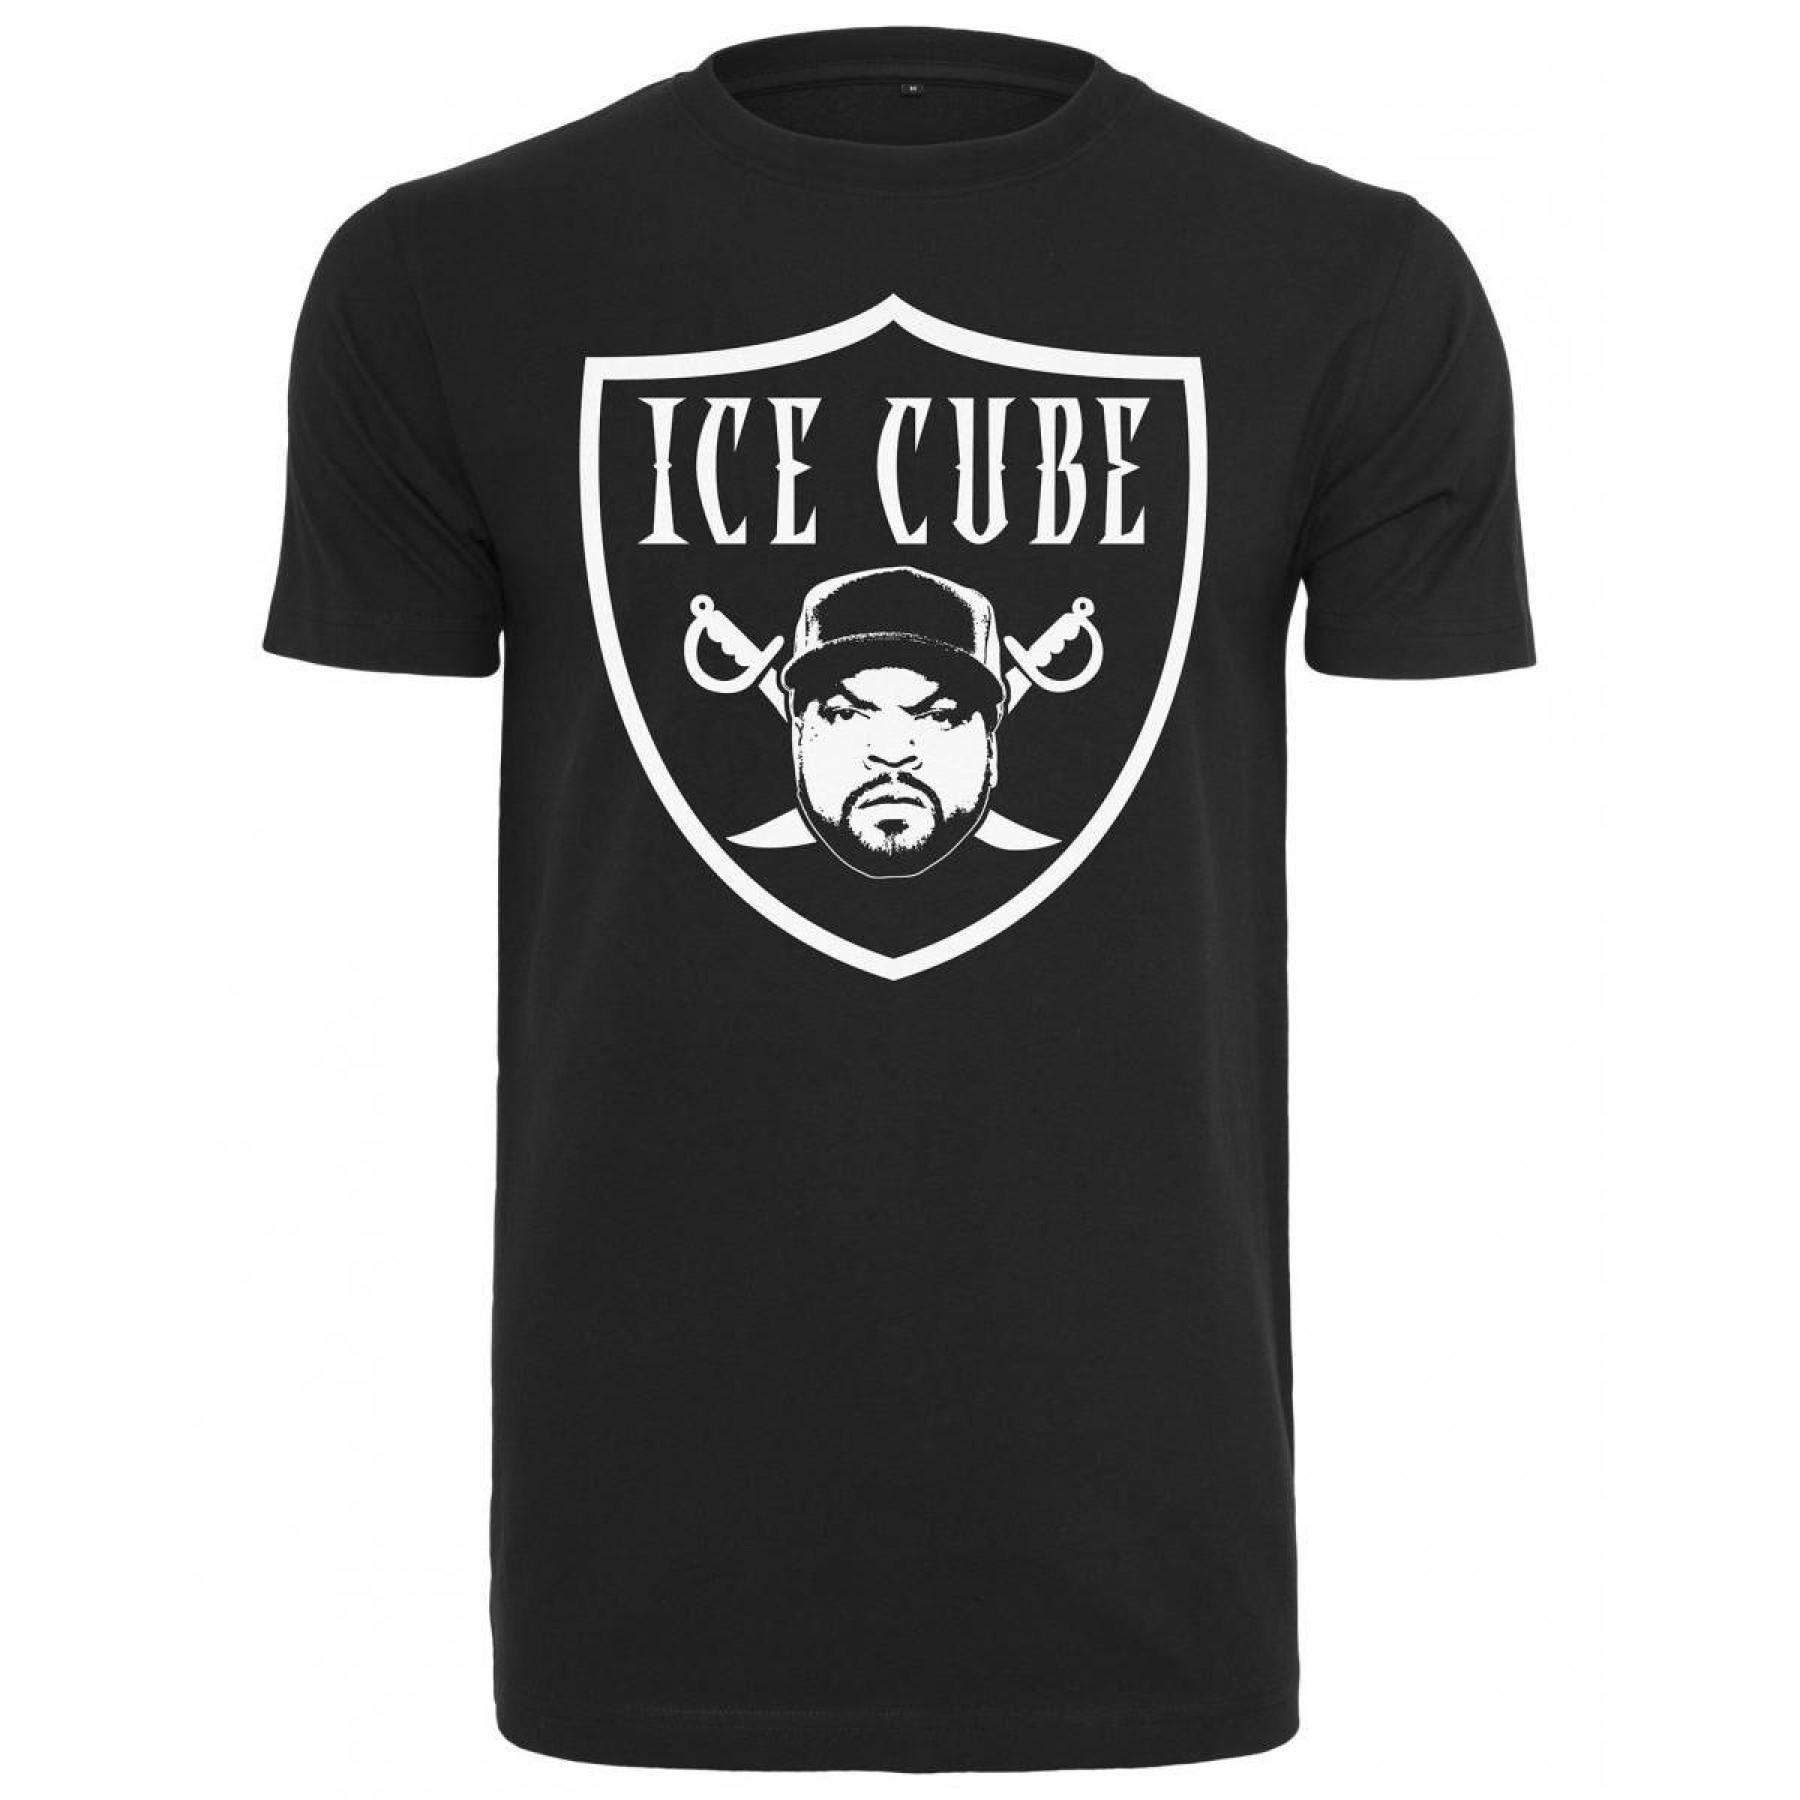 Koszulka Urban classic ice cube raider